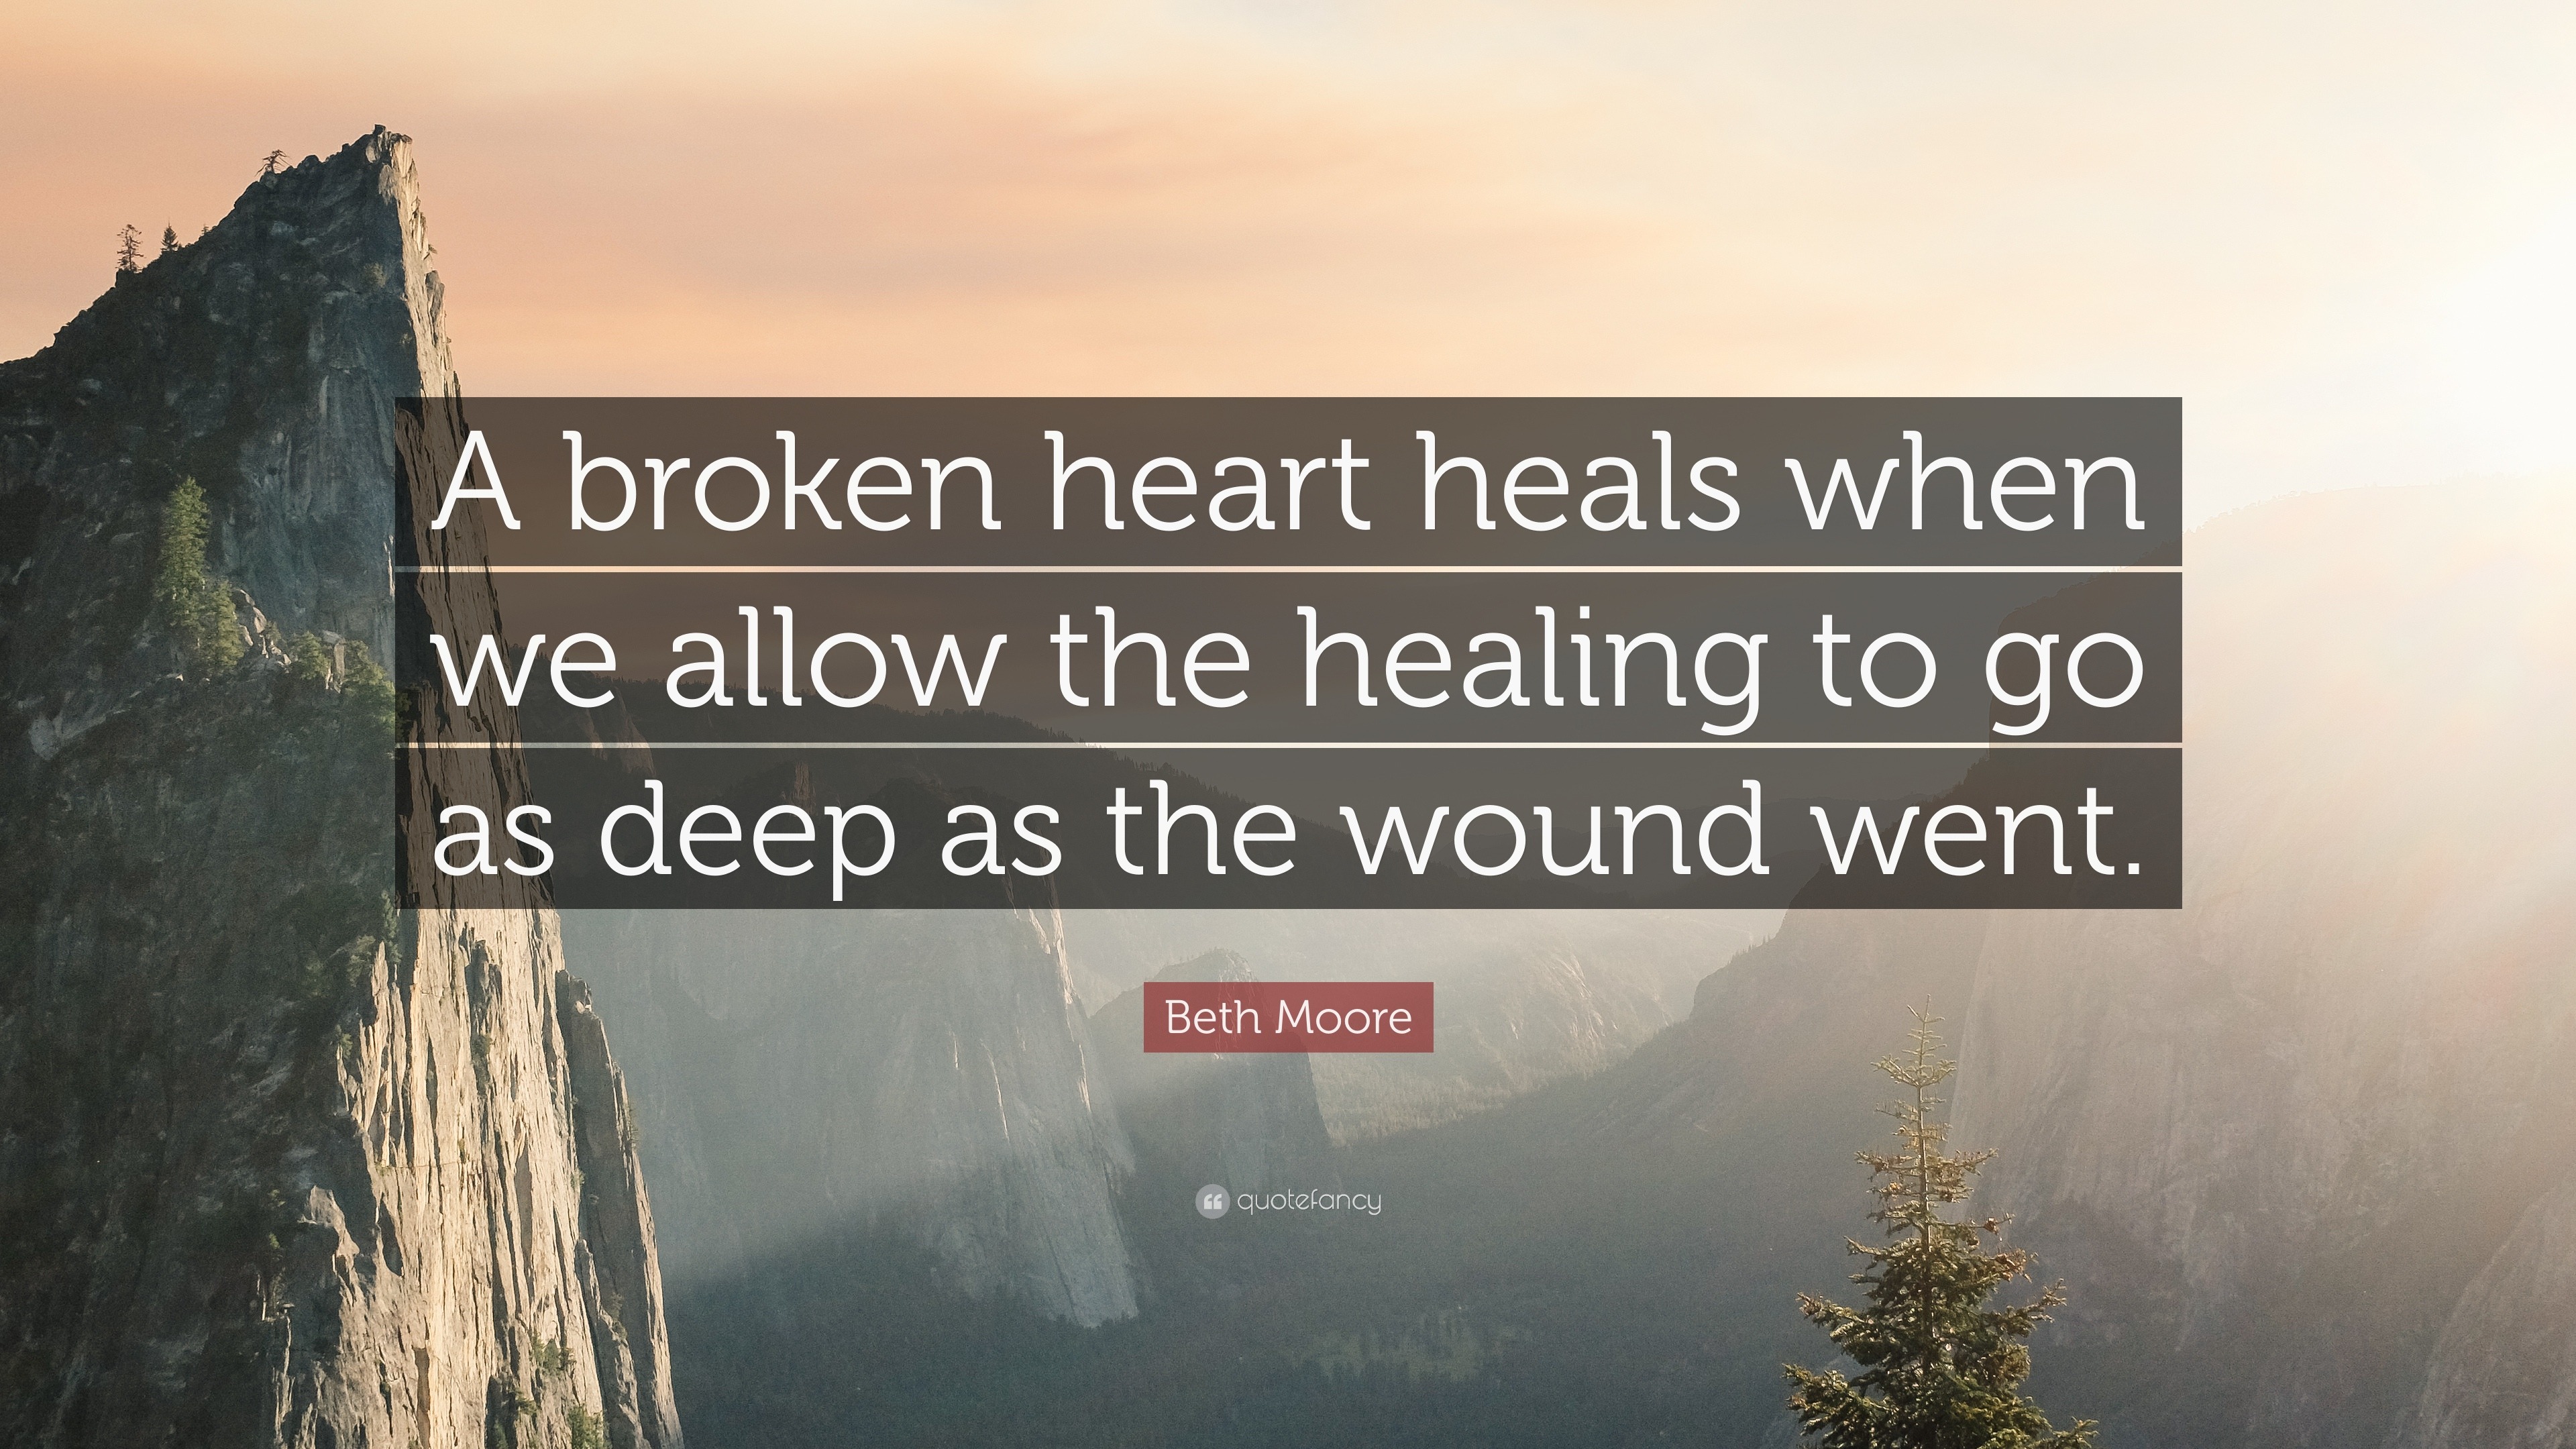 Beth Moore Quote “A broken heart heals when we allow the